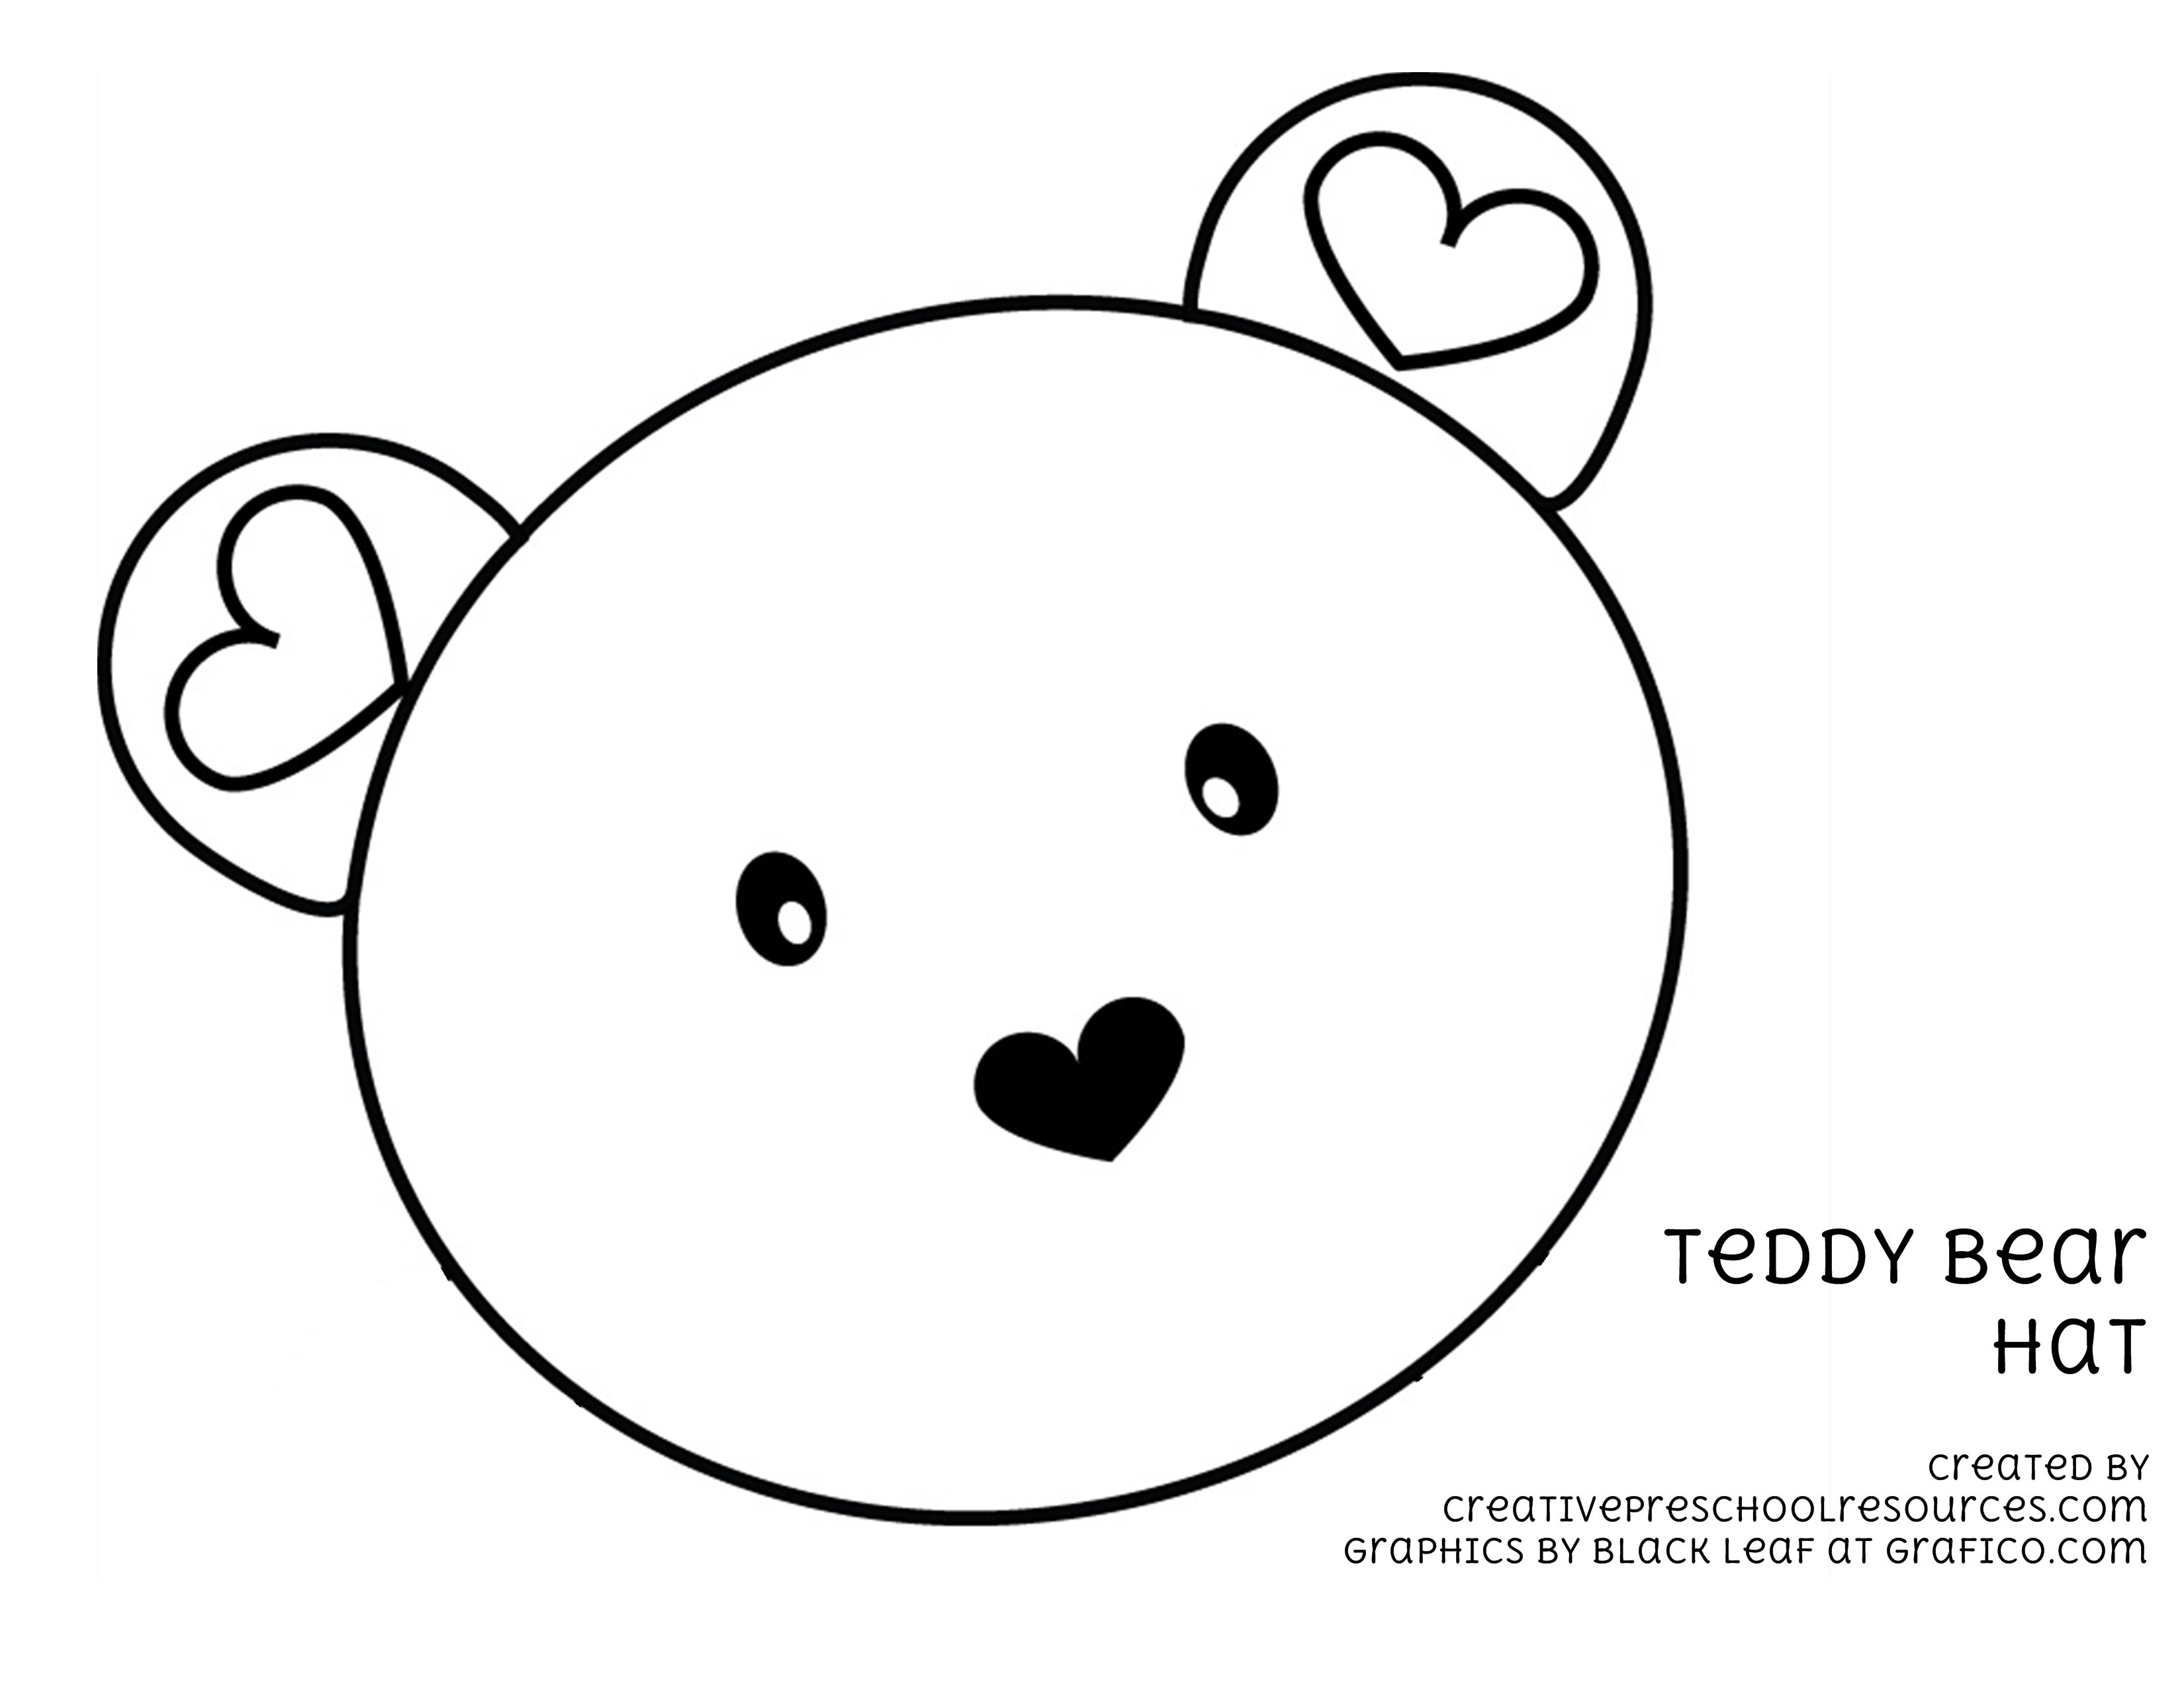 How To Draw A Teddy Bear - An Easy Cute Teddy Bear Drawing